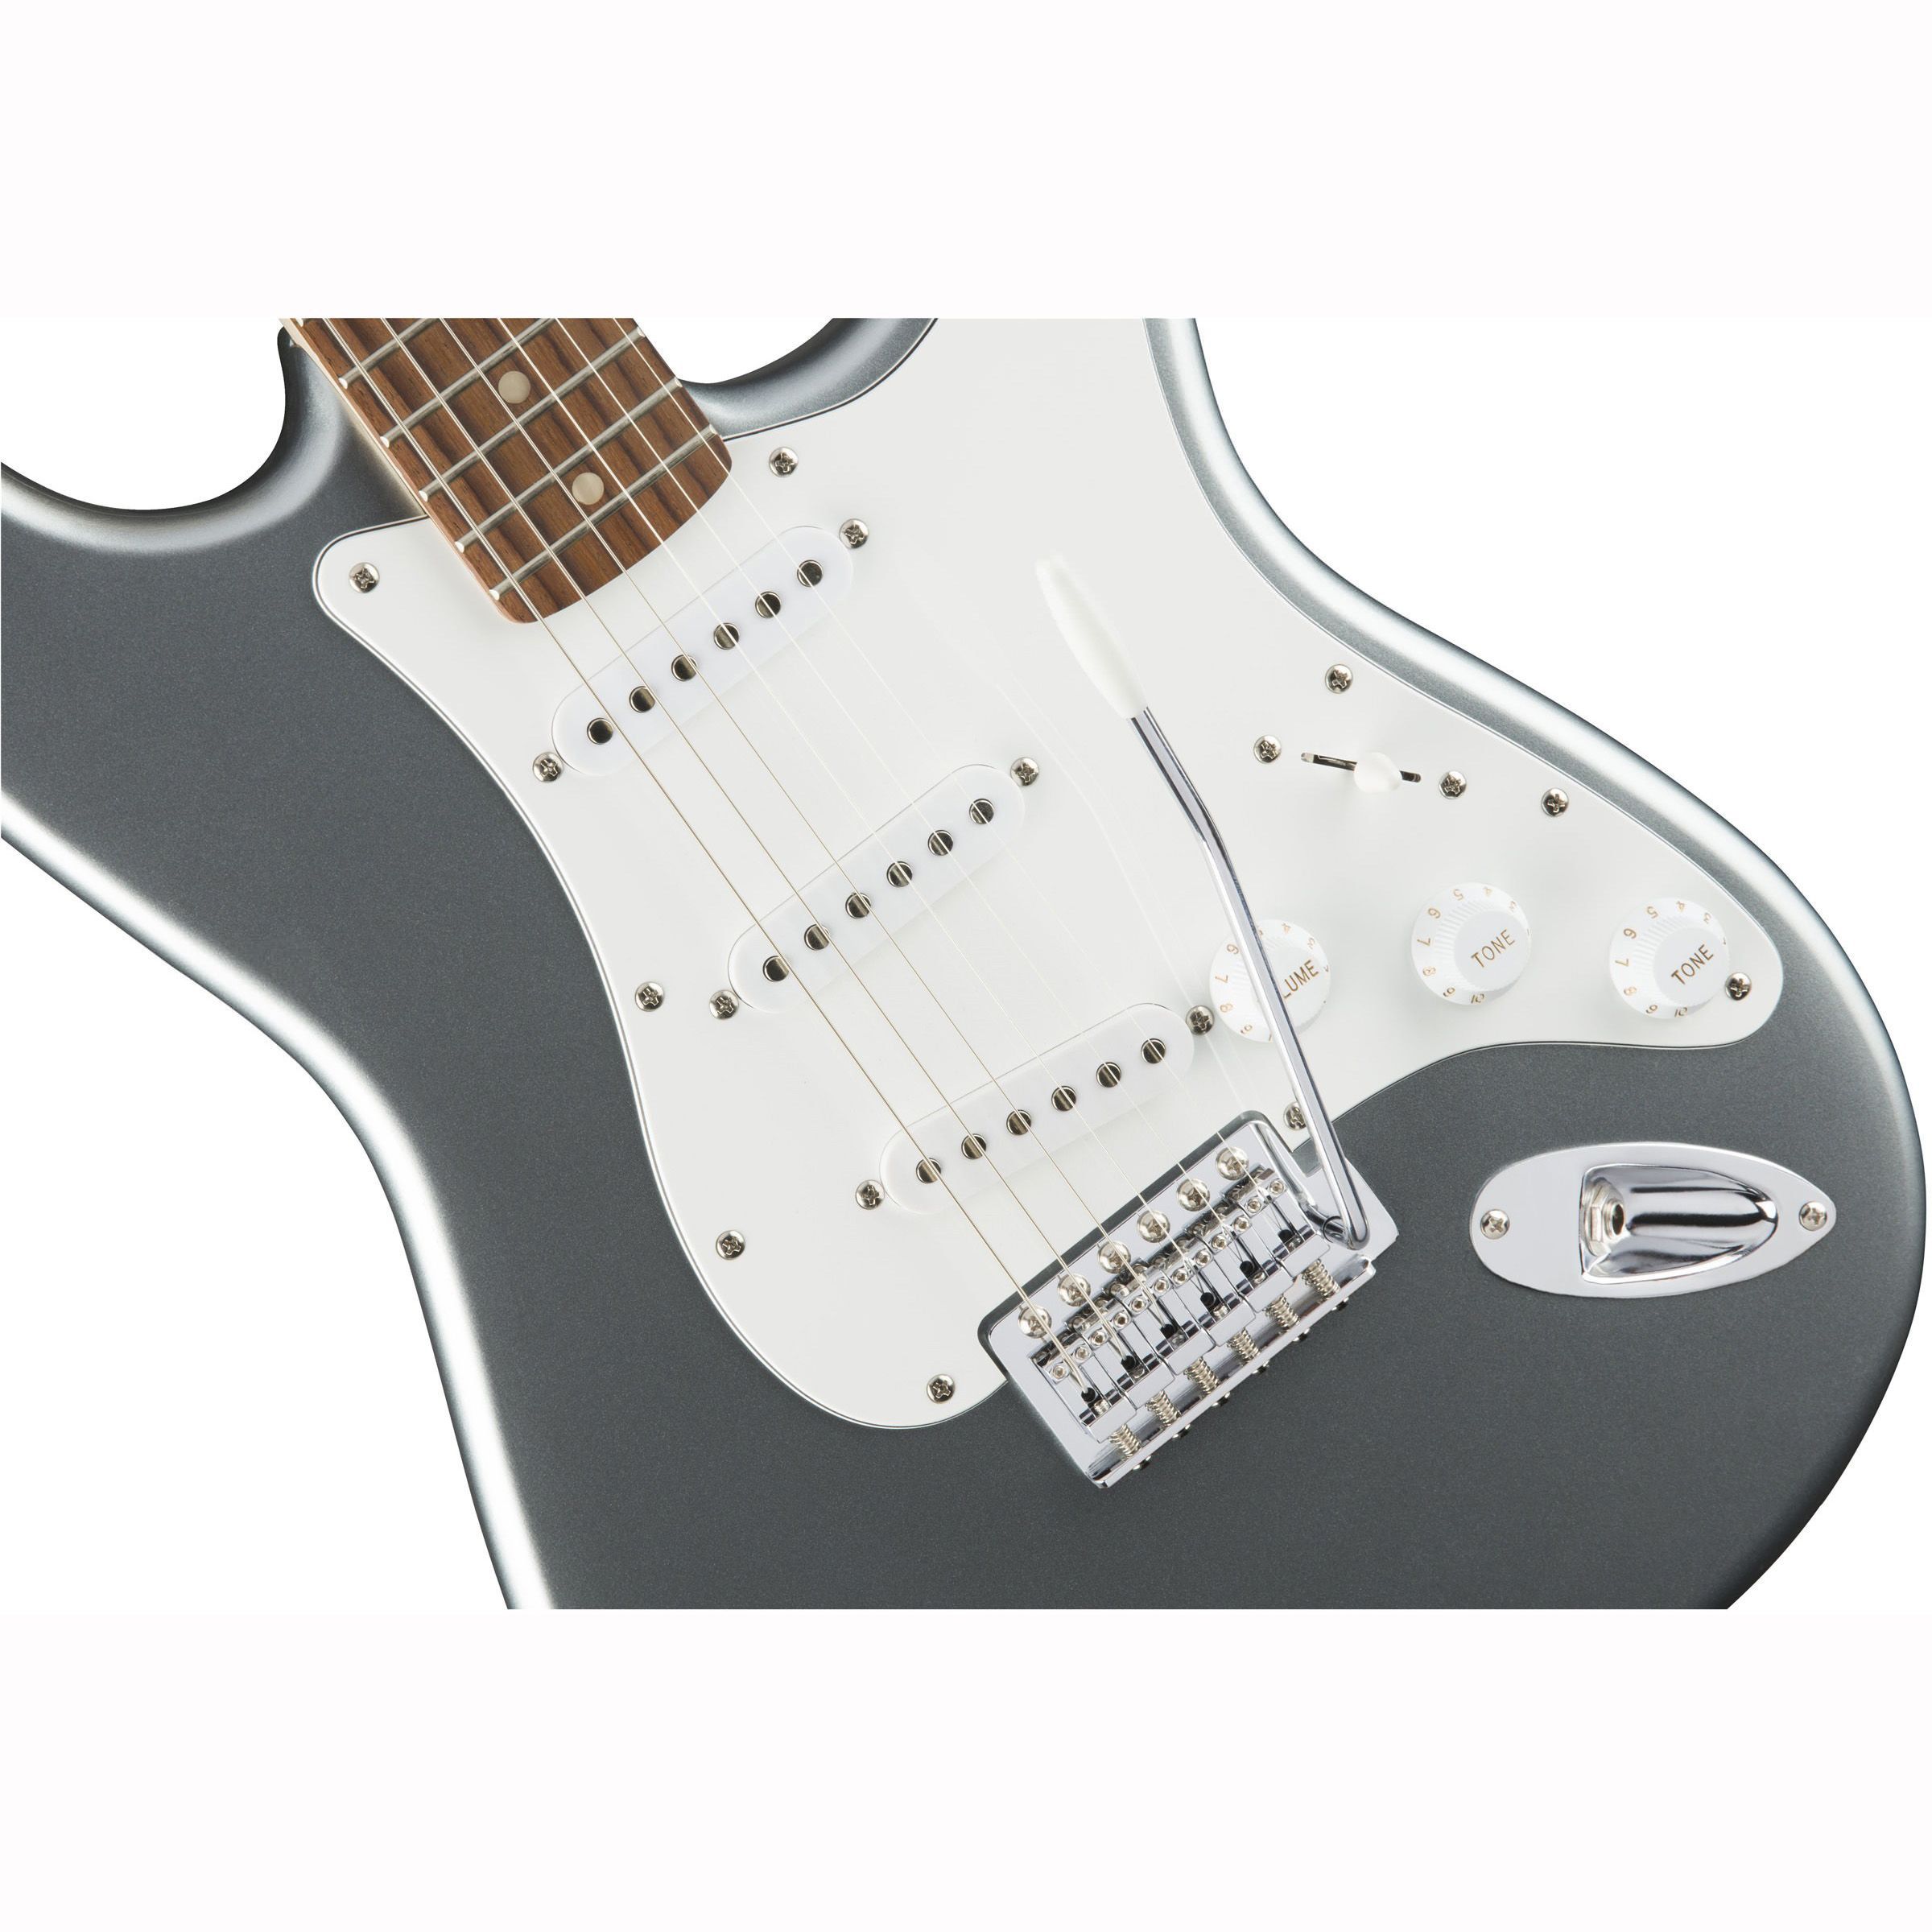 Affinity stratocaster. Электрогитара Squier Affinity Stratocaster HSS. Гитара Fender Squier Stratocaster Affinity. Электрогитара Fender Squier Affinity. Электрогитара Fender Squier Stratocaster.